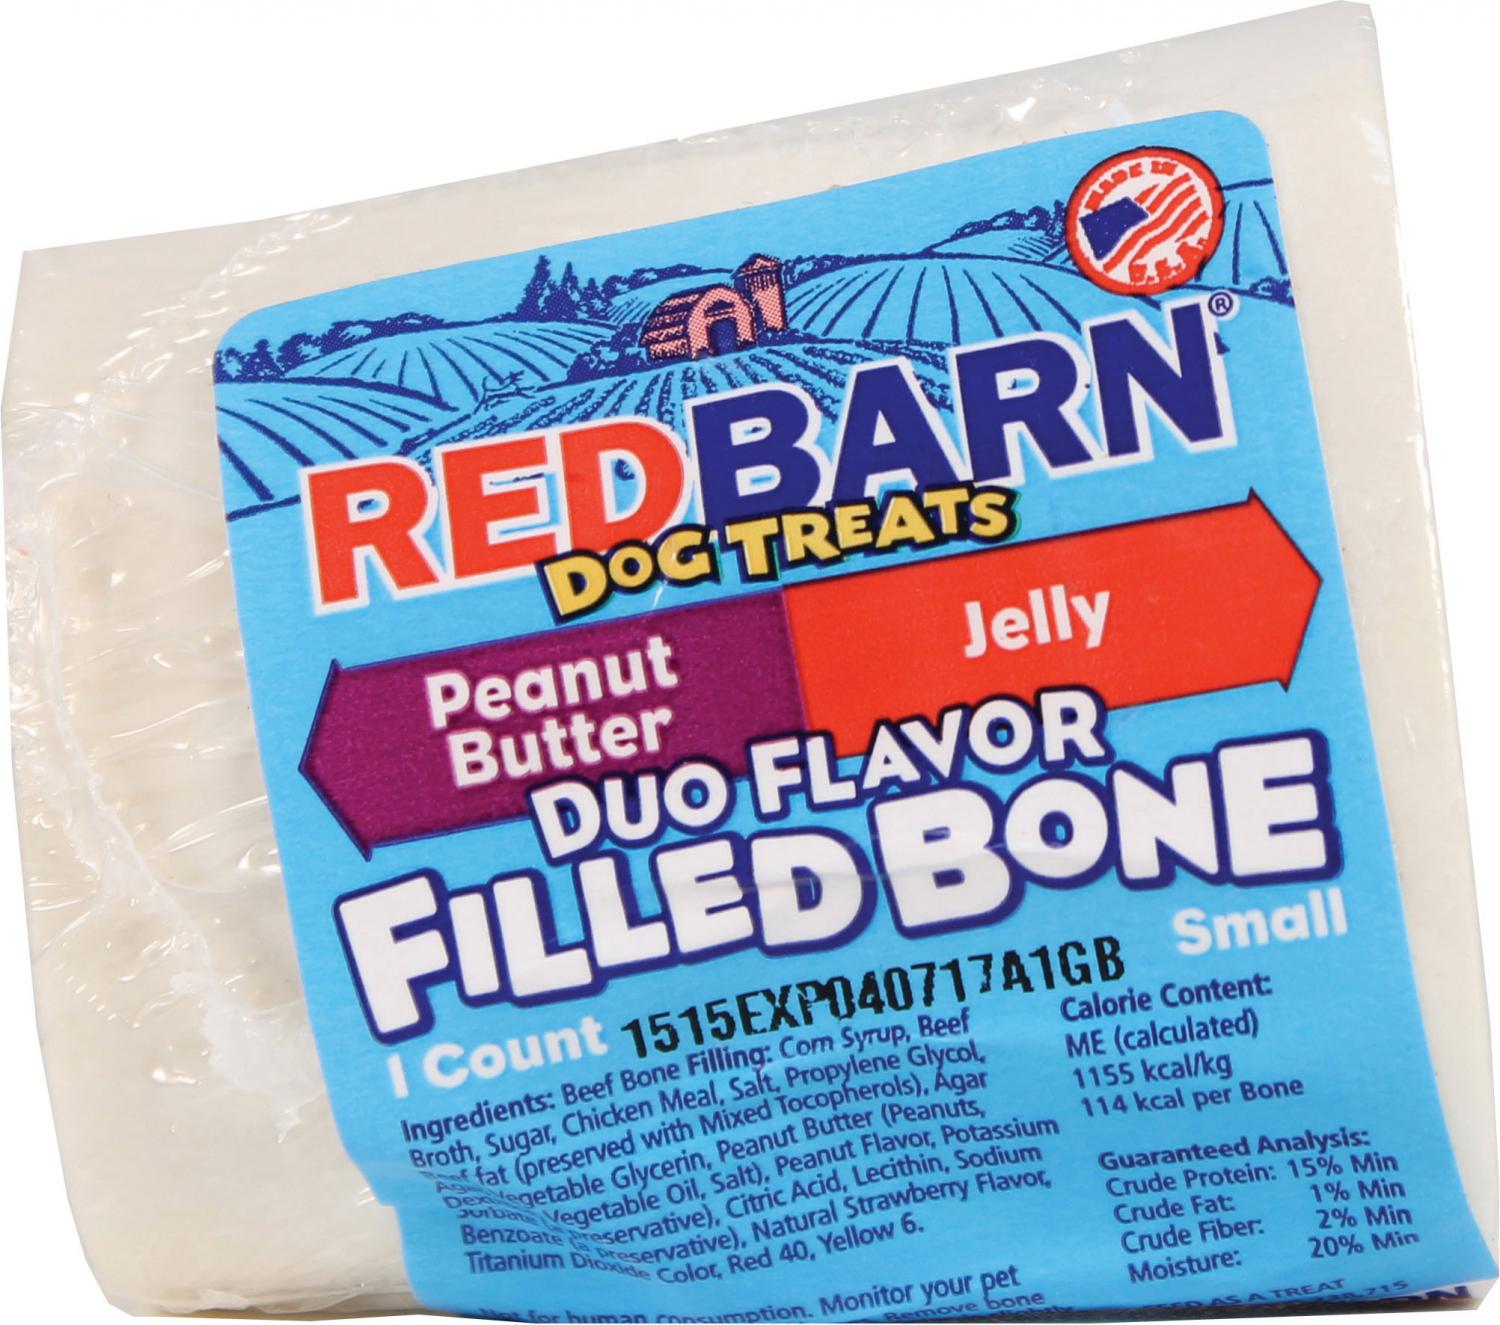 Redbarn Duo Flavor Filled Bone Dog Treat, Small, Peanut Butter & Jelly